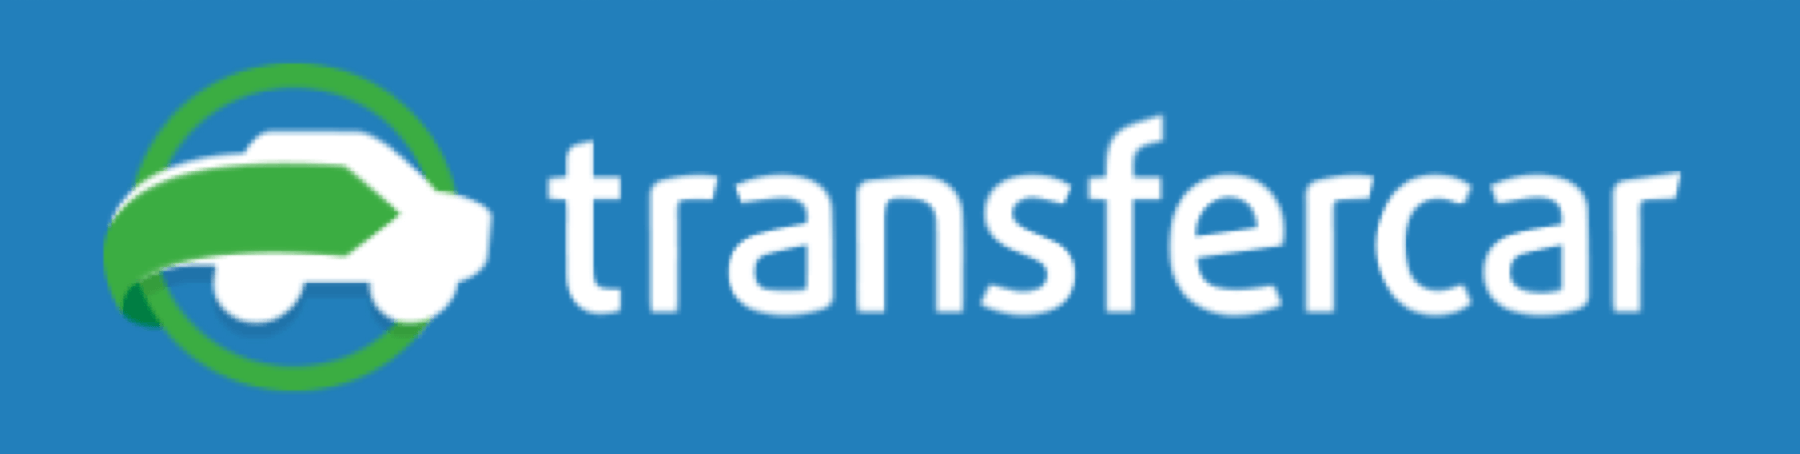 Transfercar logo